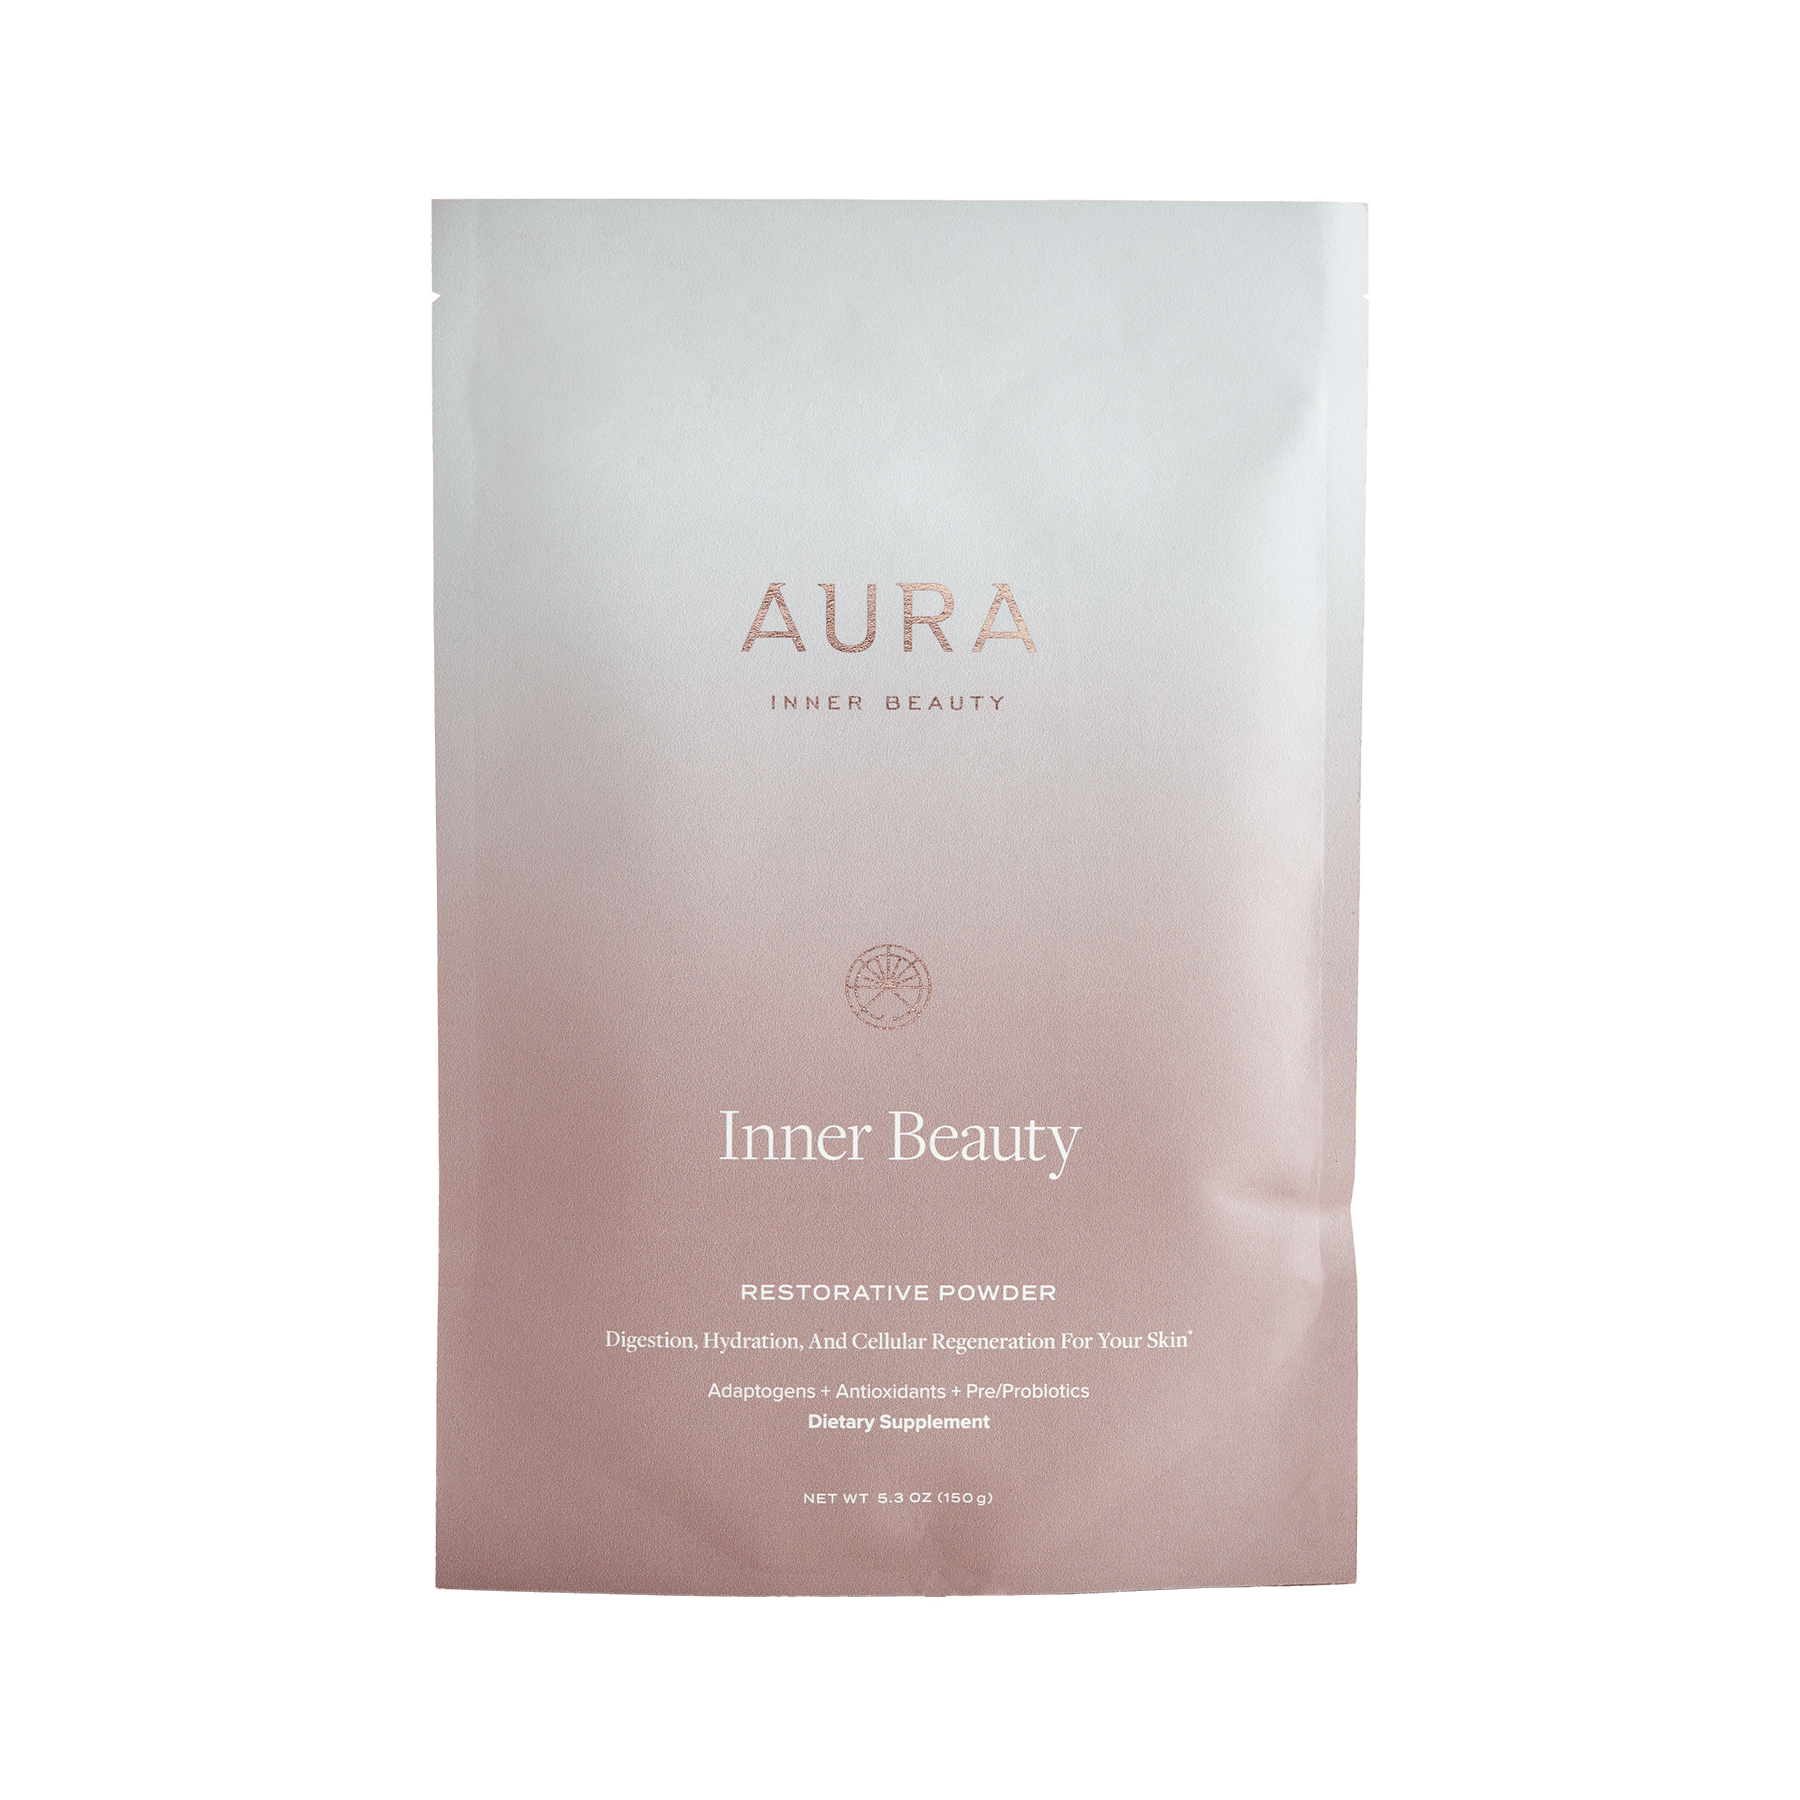 Aura Inner Beauty Adaptogens Inner Beauty Restorative Powder sunja link - canada